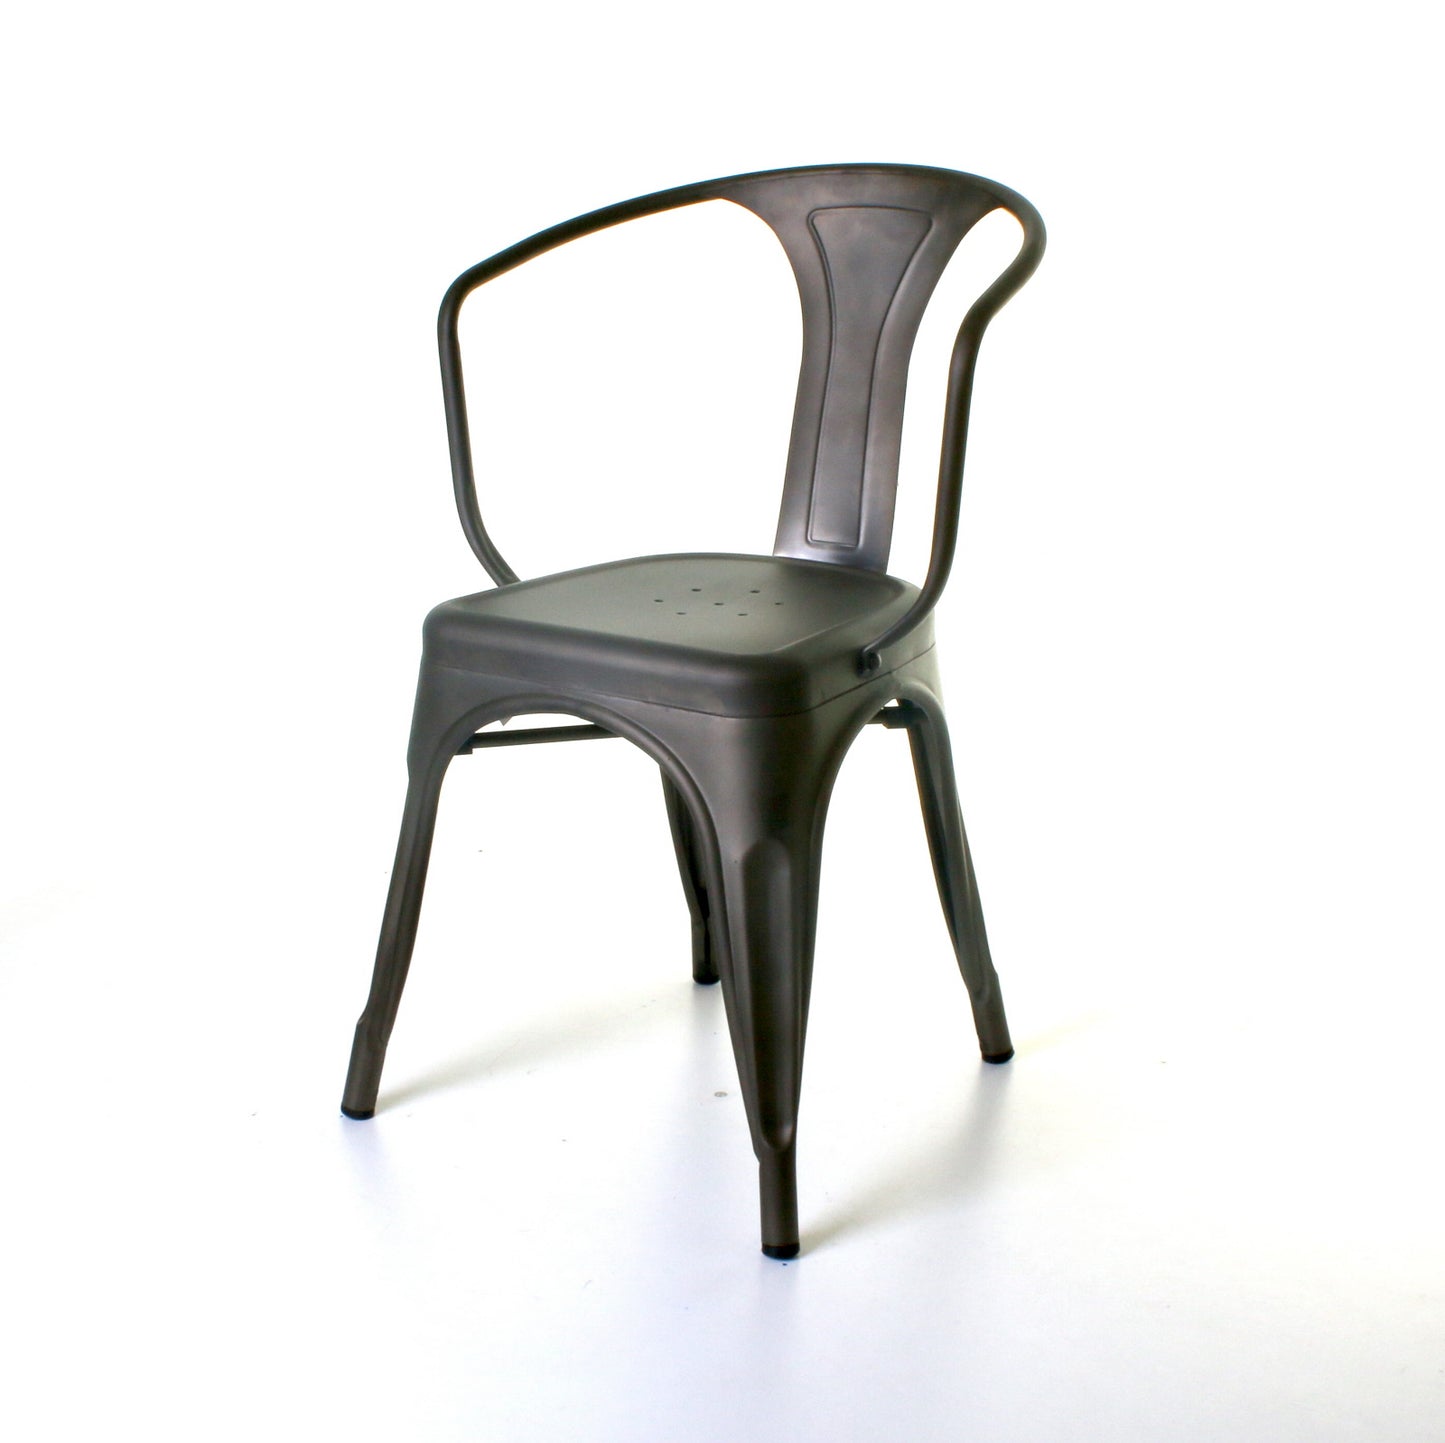 5PC Belvedere Table Forli Chair & Castel Stool Set - Gun Metal Grey